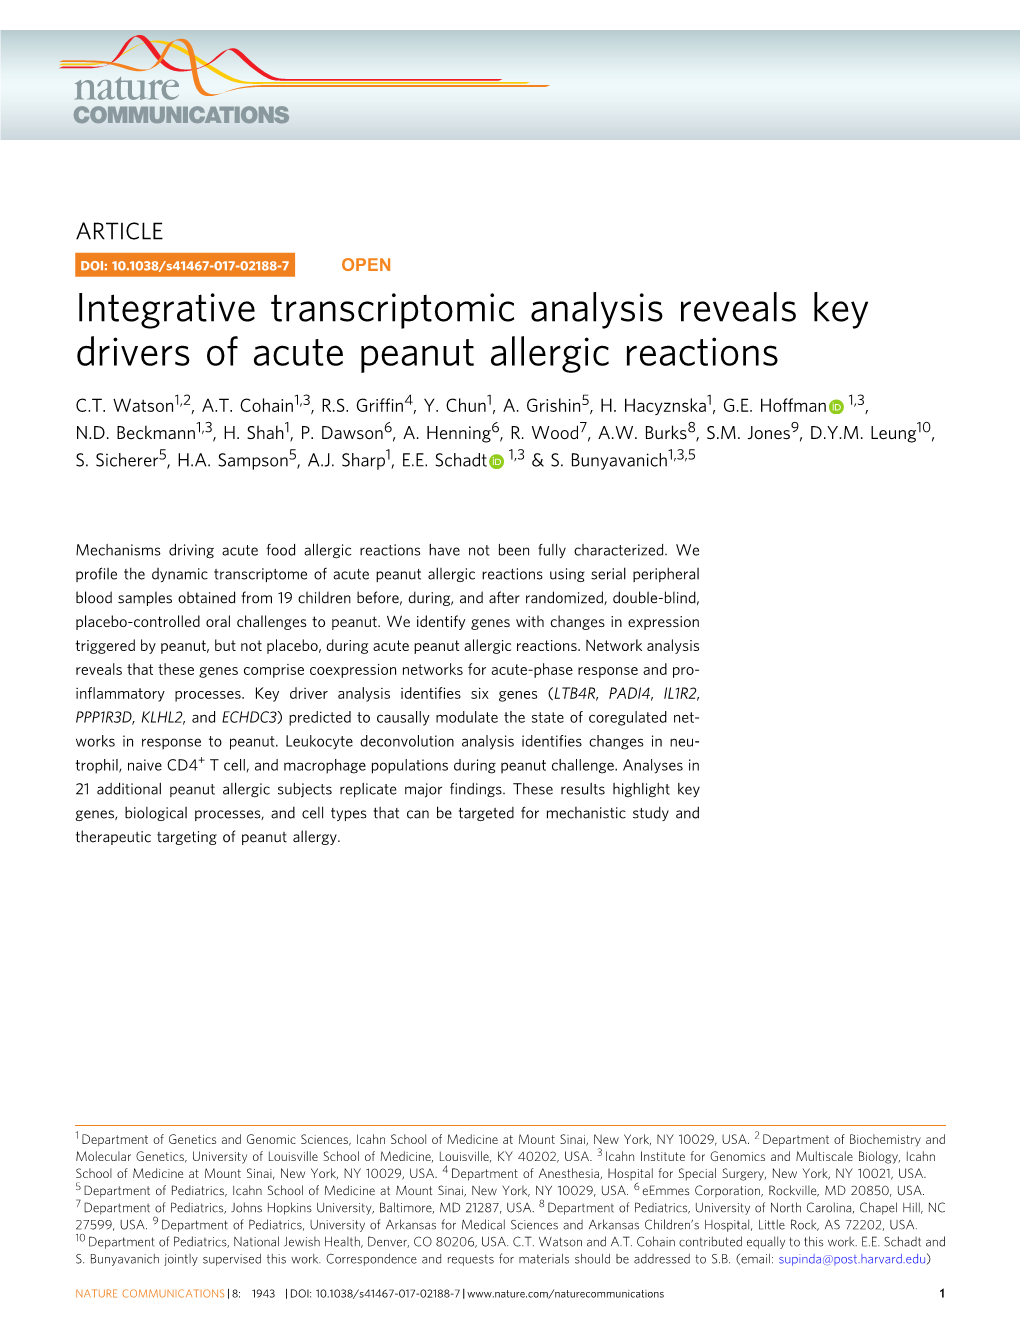 Integrative Transcriptomic Analysis Reveals Key Drivers of Acute Peanut Allergic Reactions